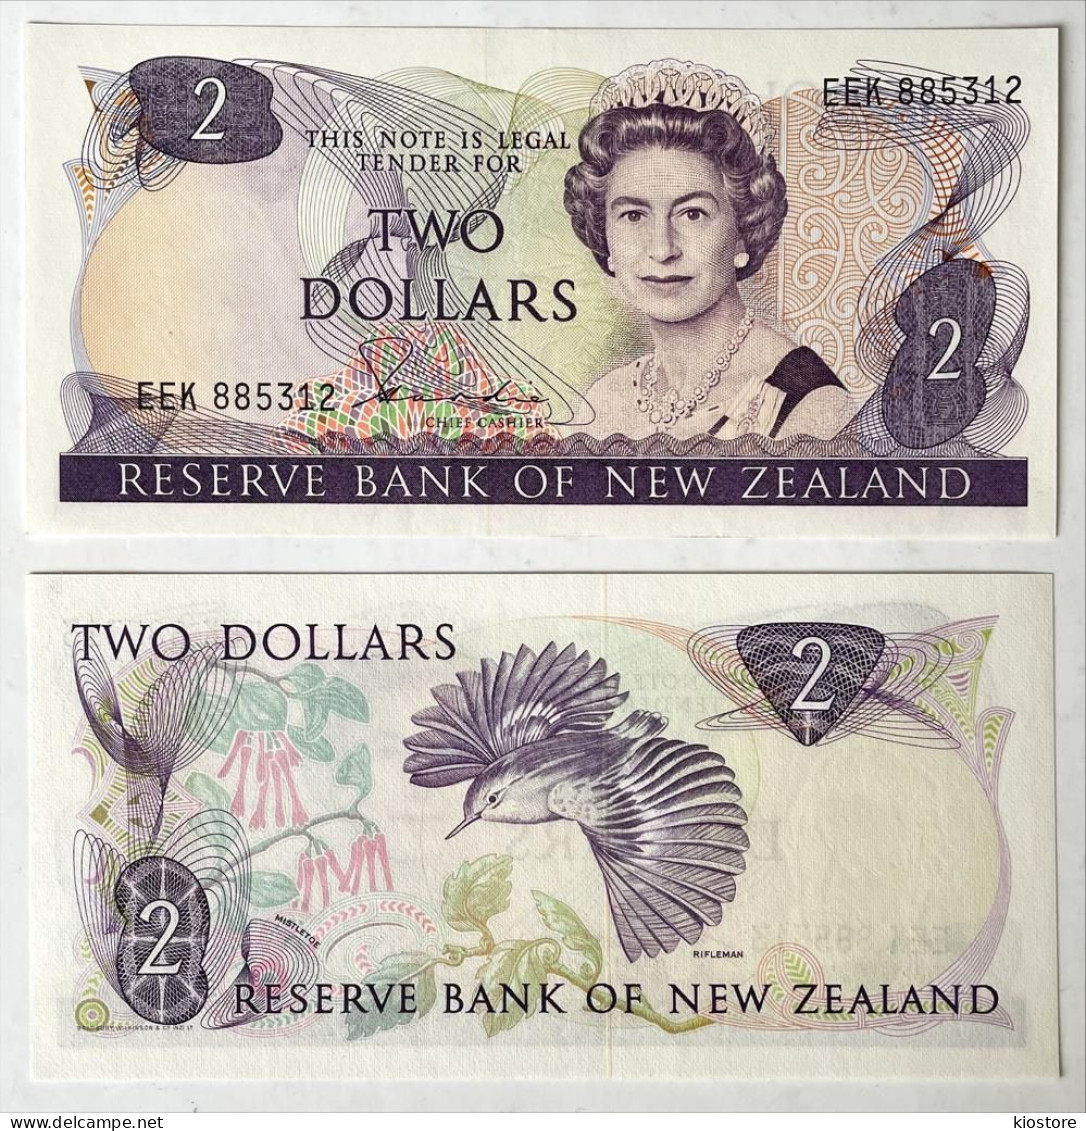 New Zealand 2 Dollars 1981 P170a UNC - New Zealand